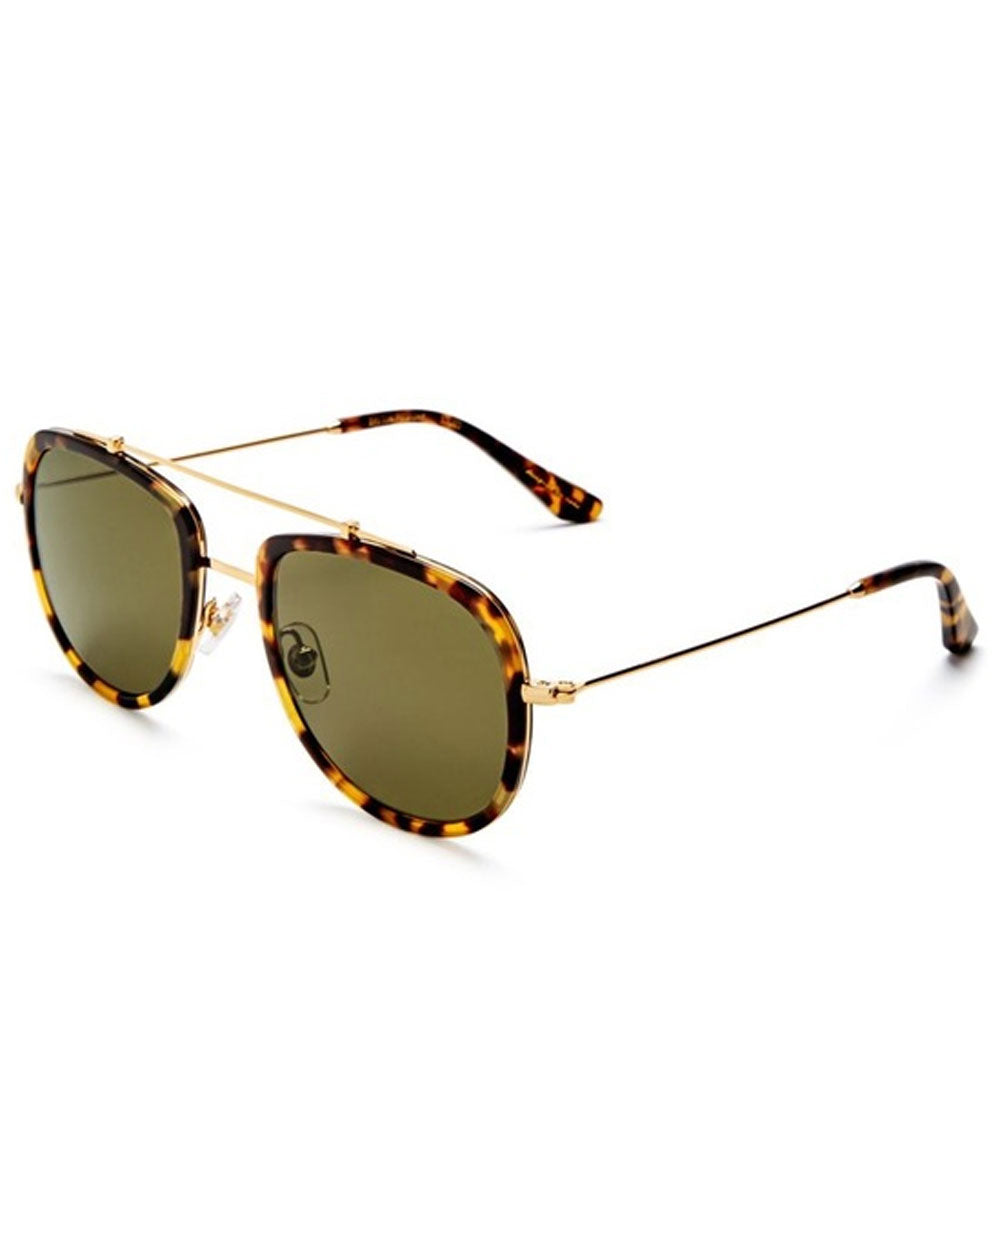 Breton Sunglasses in Blonde Tortoise Polarized 24K